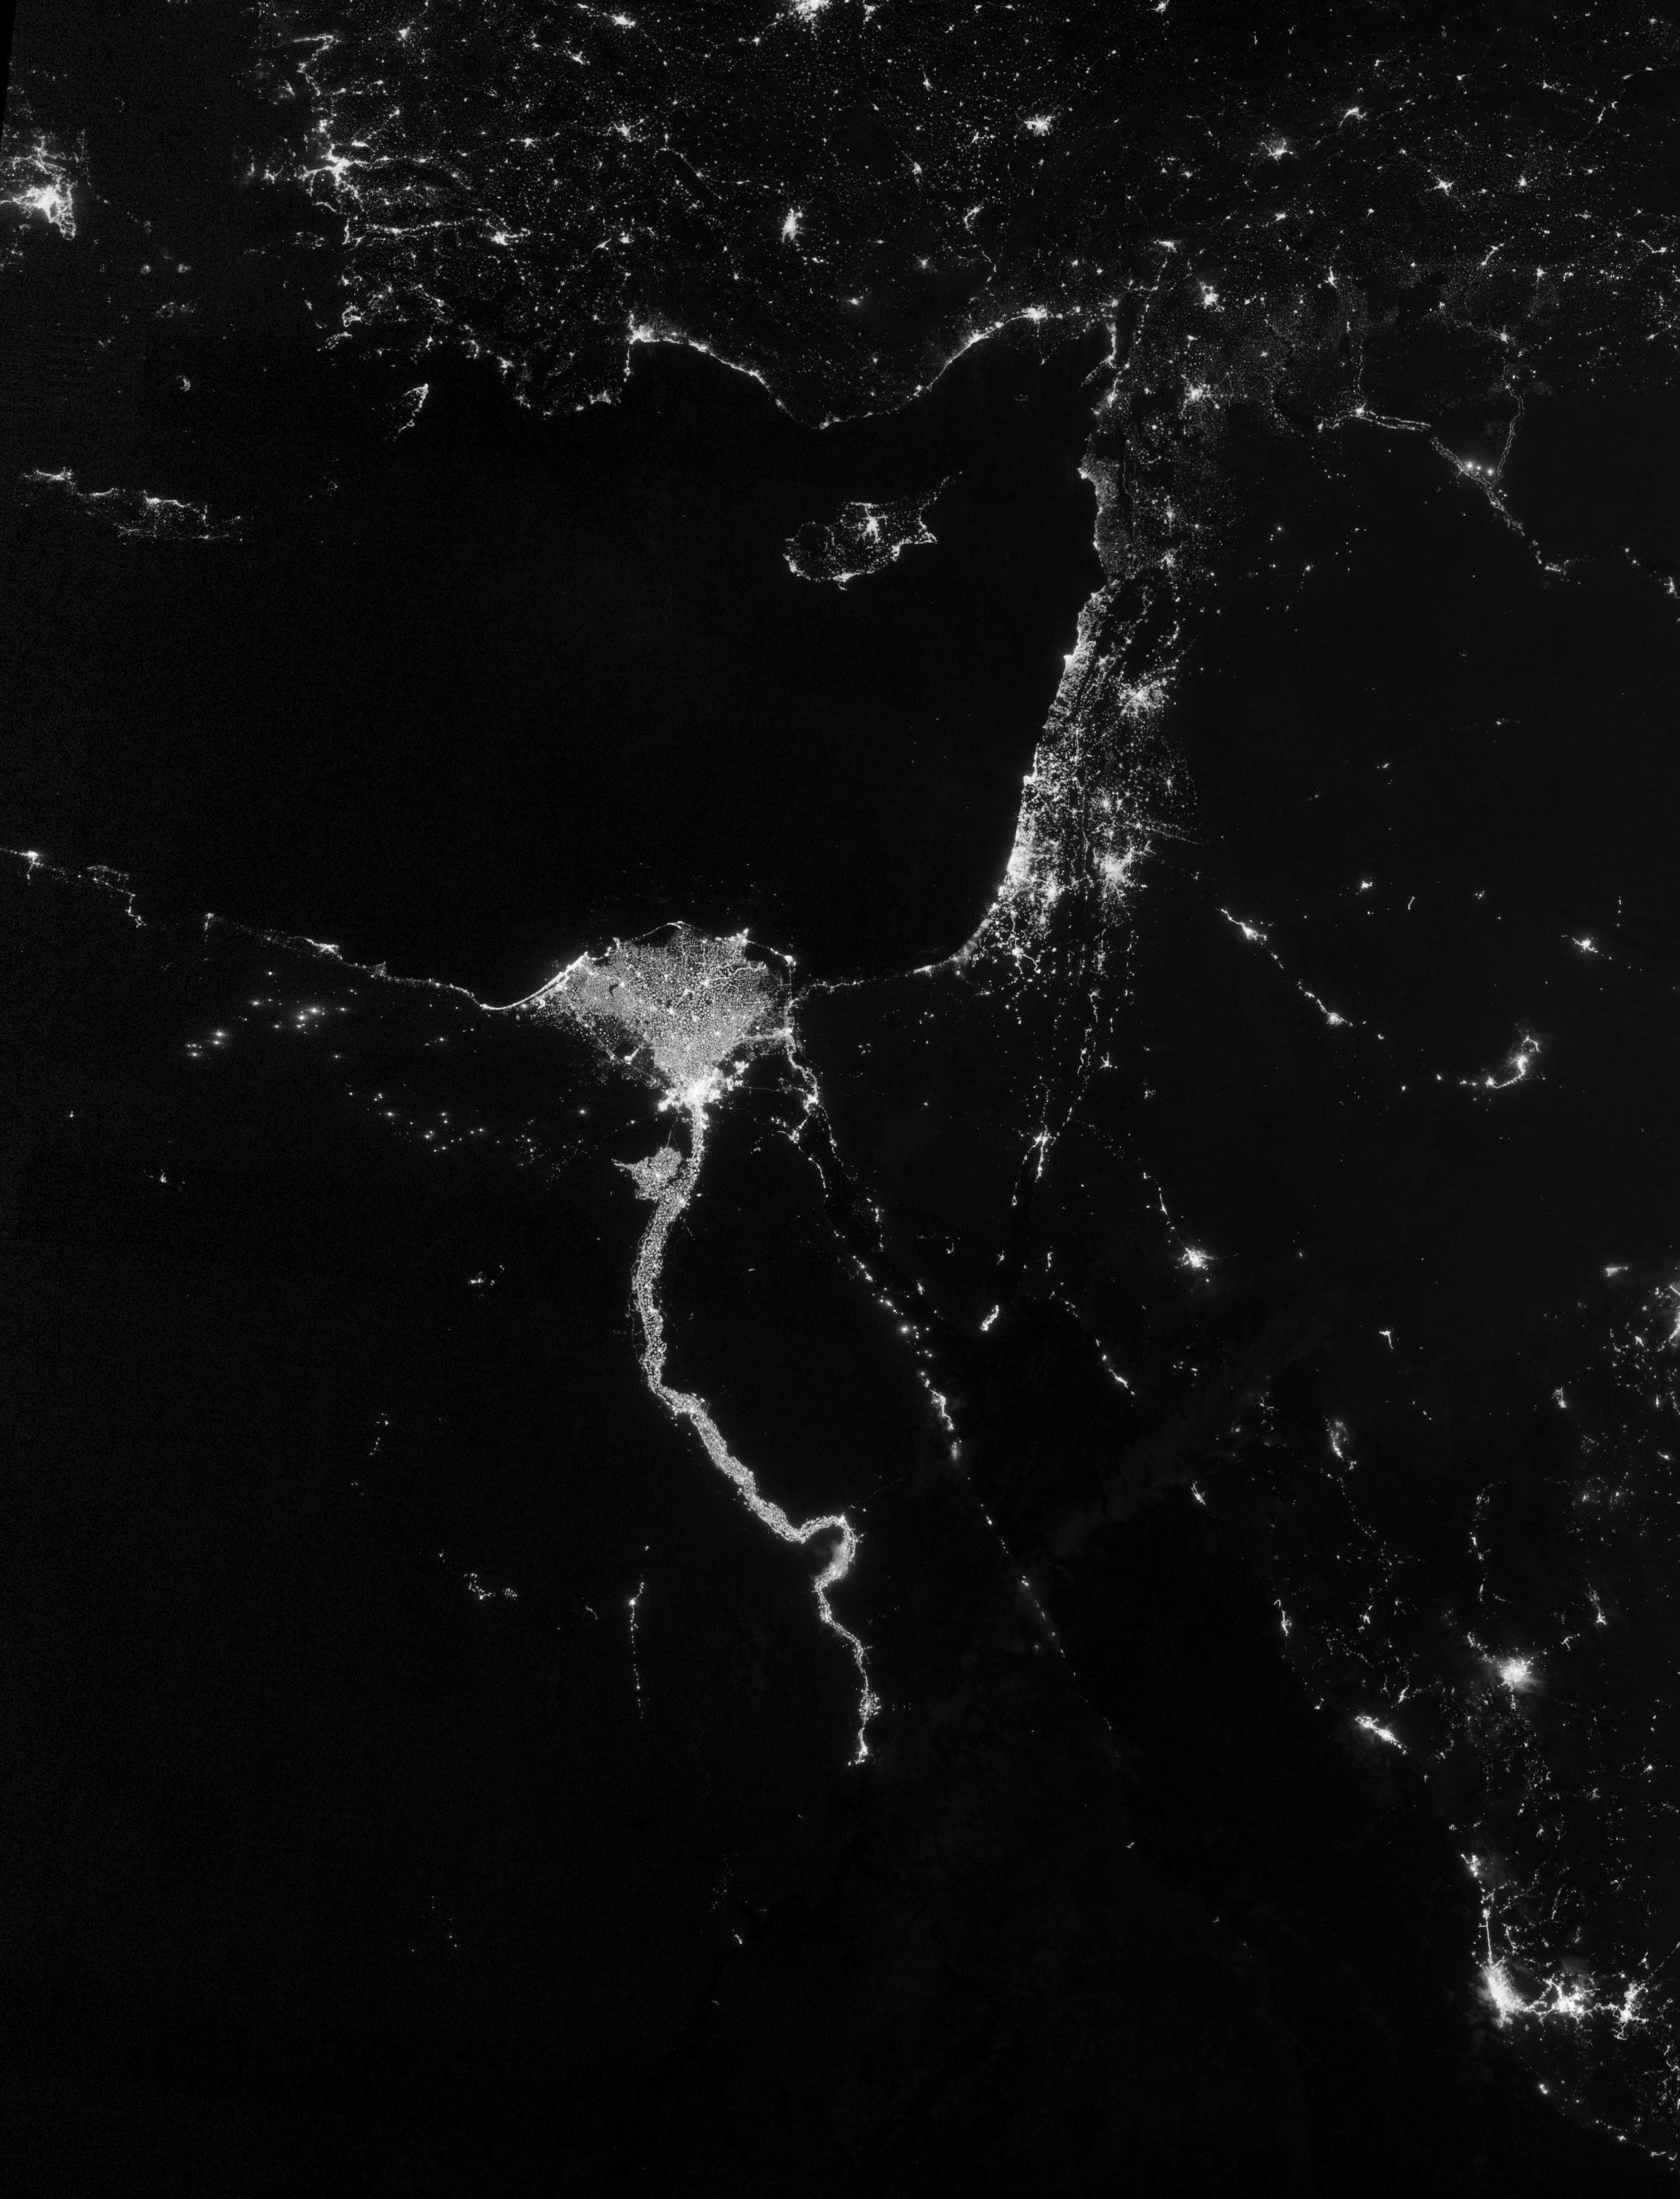 City Lights Illuminate the Nile. NASA Image and Video Library